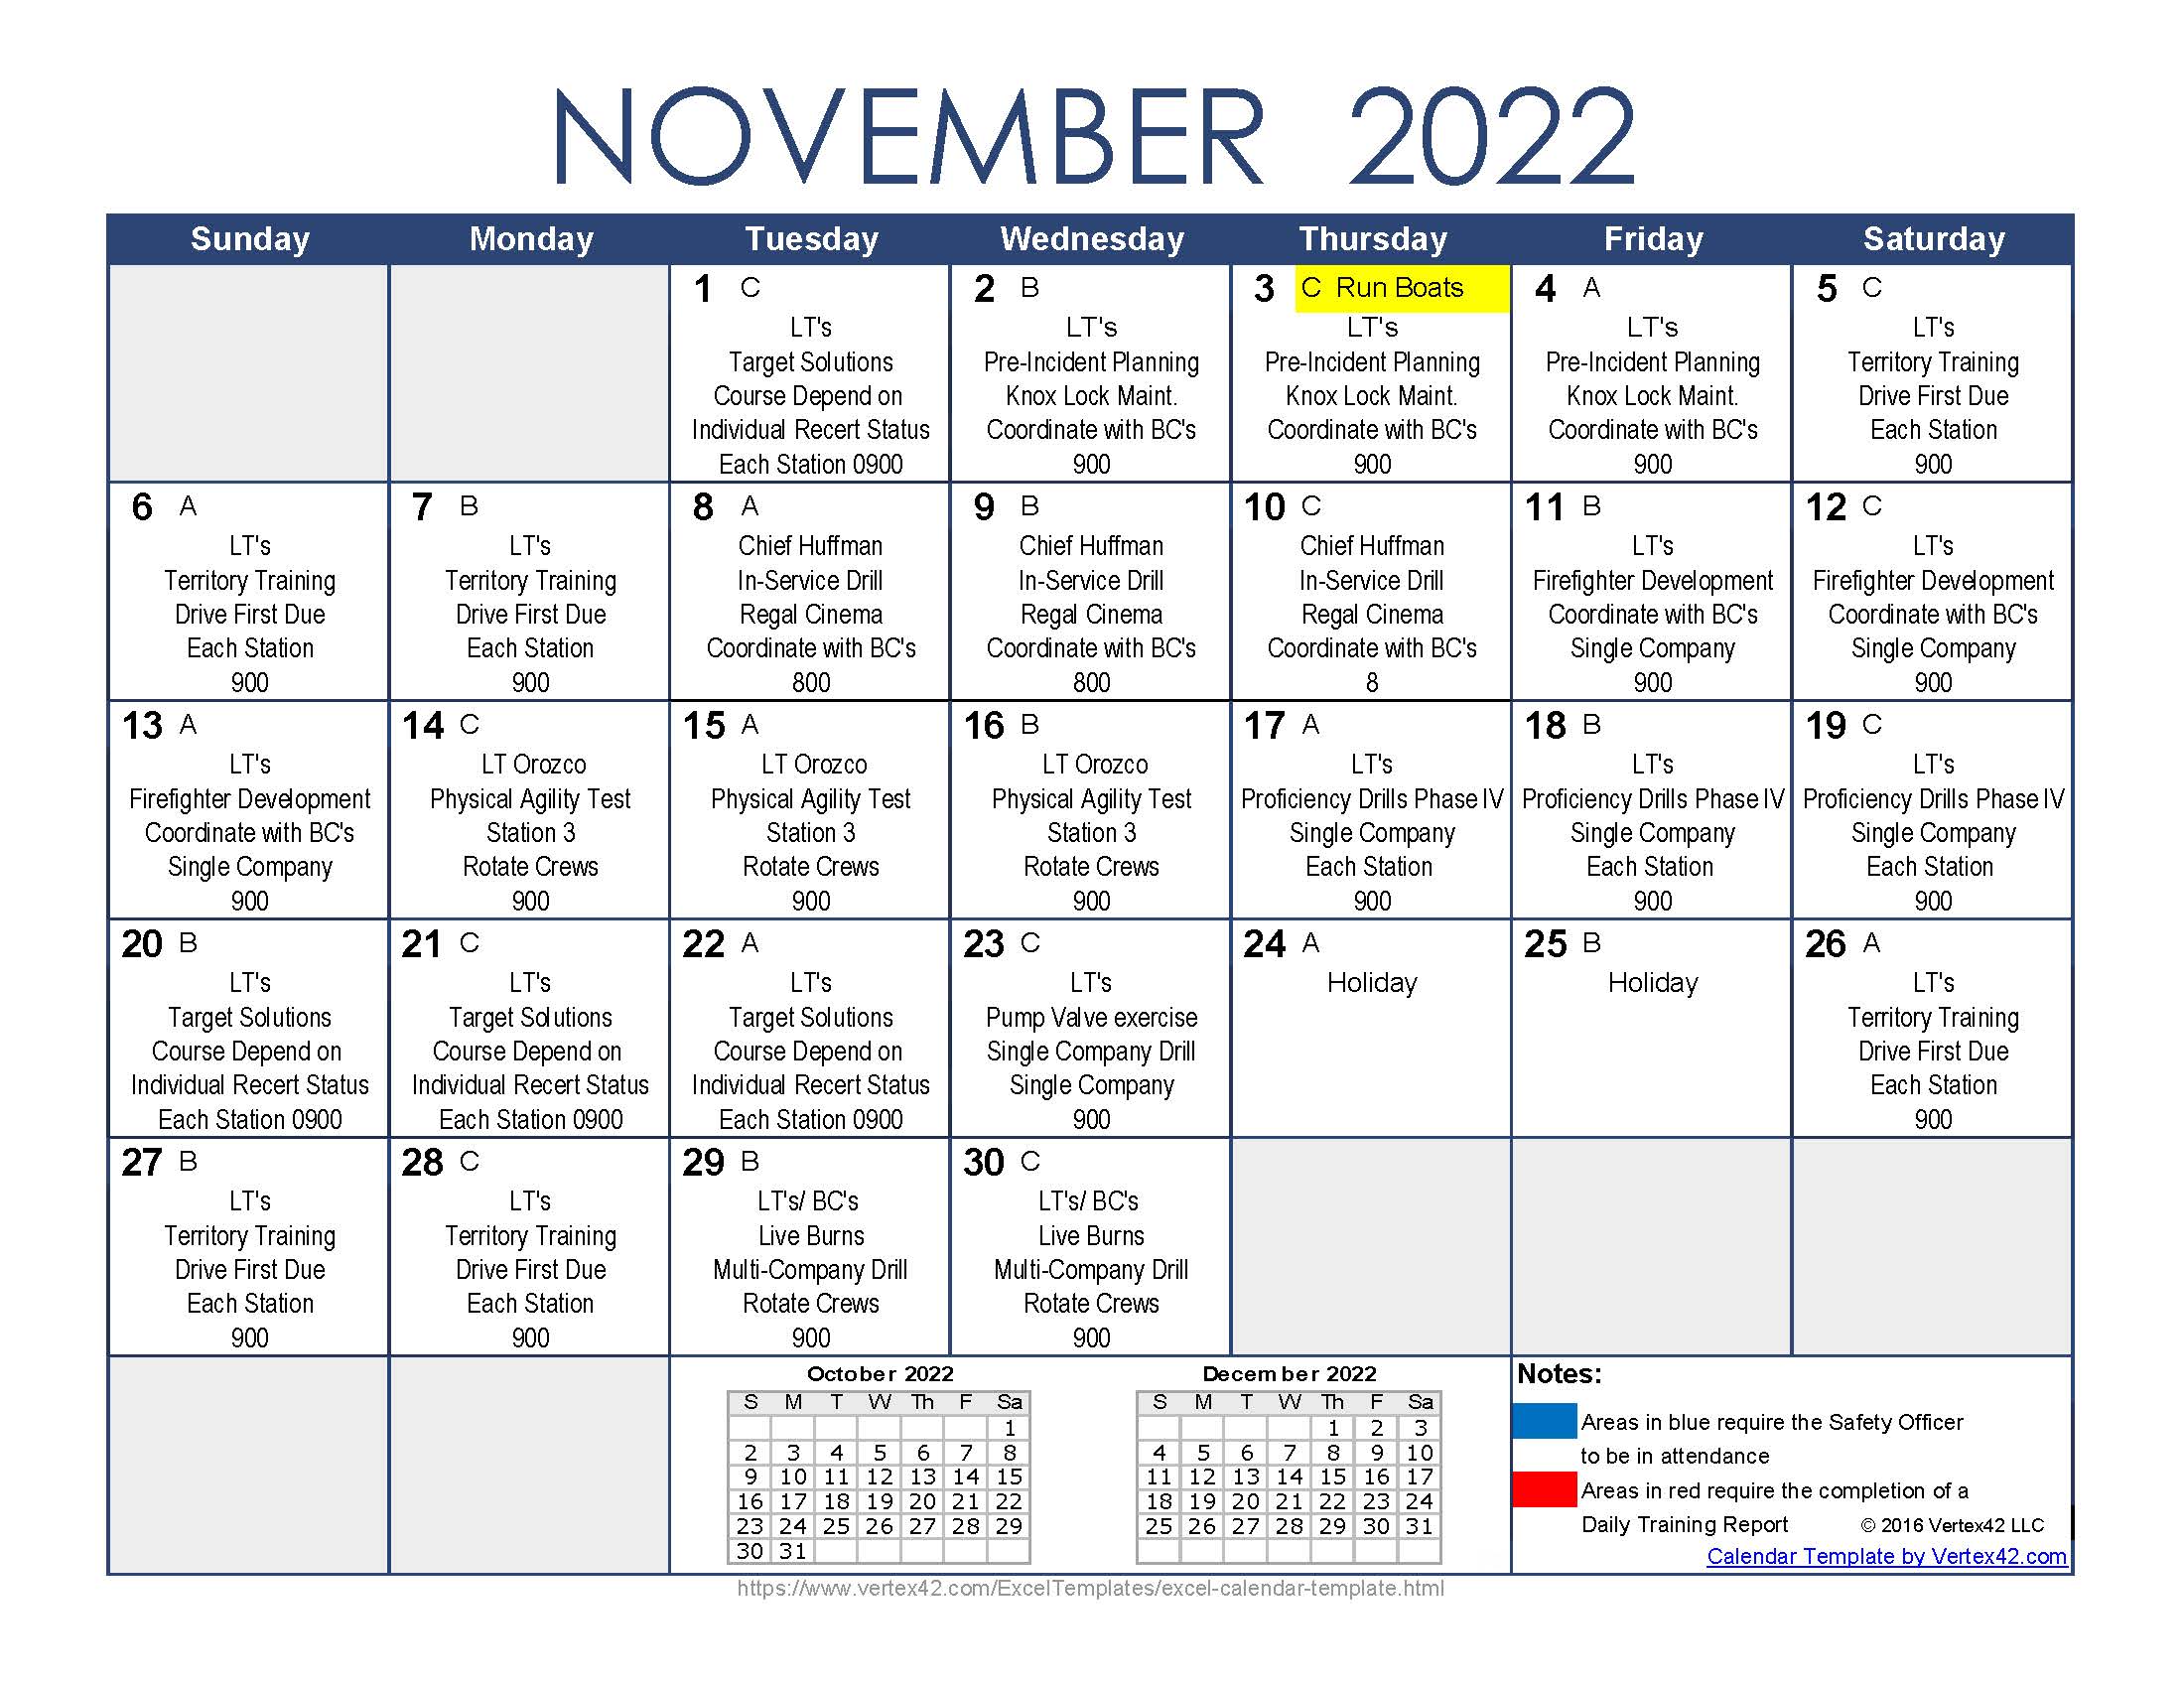 November Training Calendar